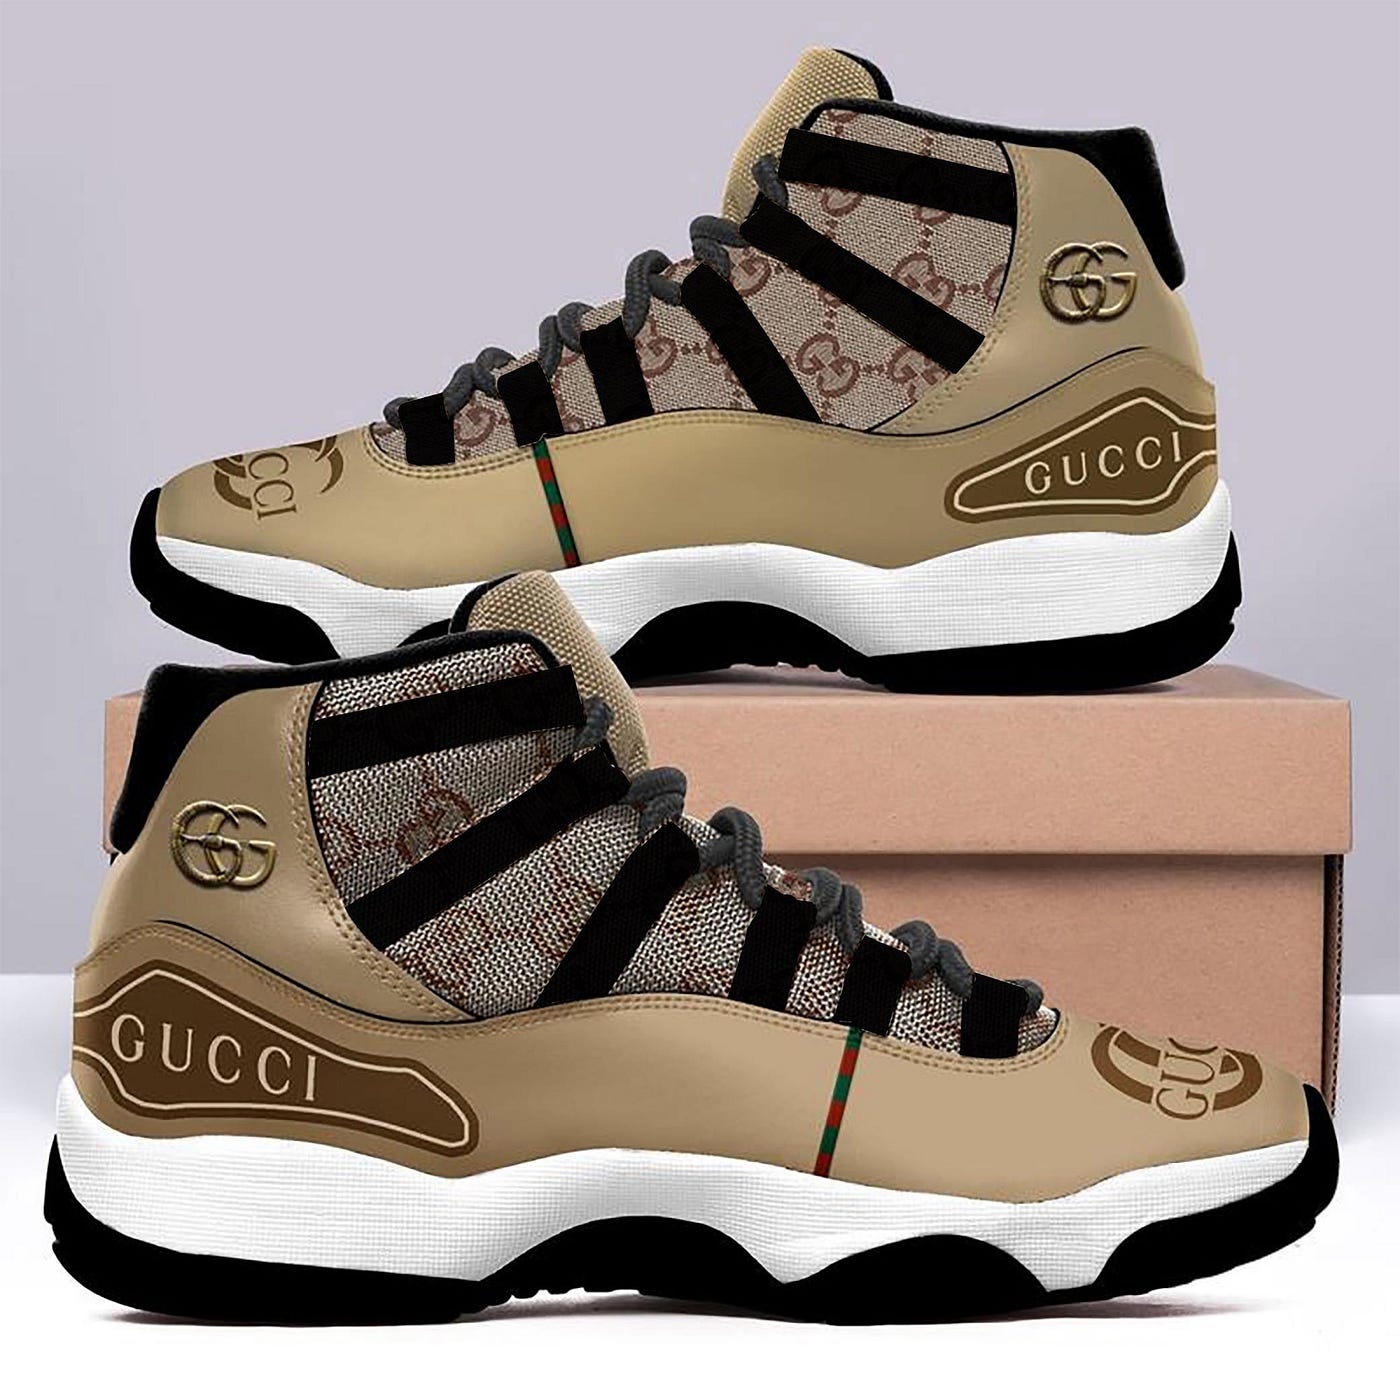 Louis Vuitton Black Brown Air Jordan 11 Sneakers Shoes Hot Lv Gifts For Men  Women Jd11 V1–081319, by son nguyen